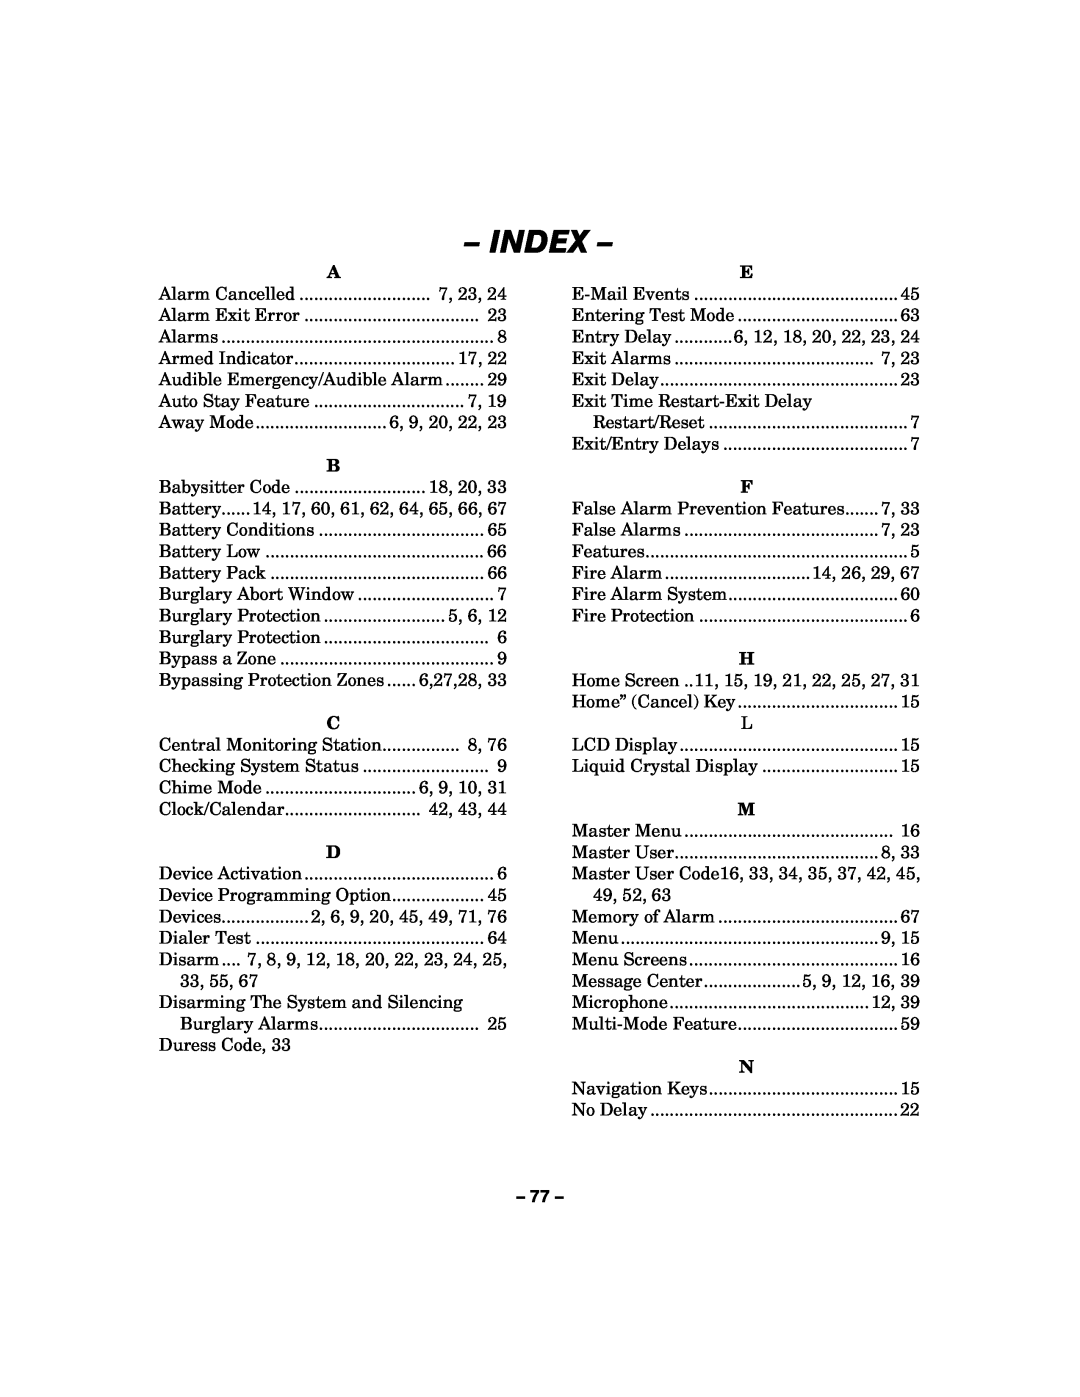 Honeywell 800-06894 manual Index 